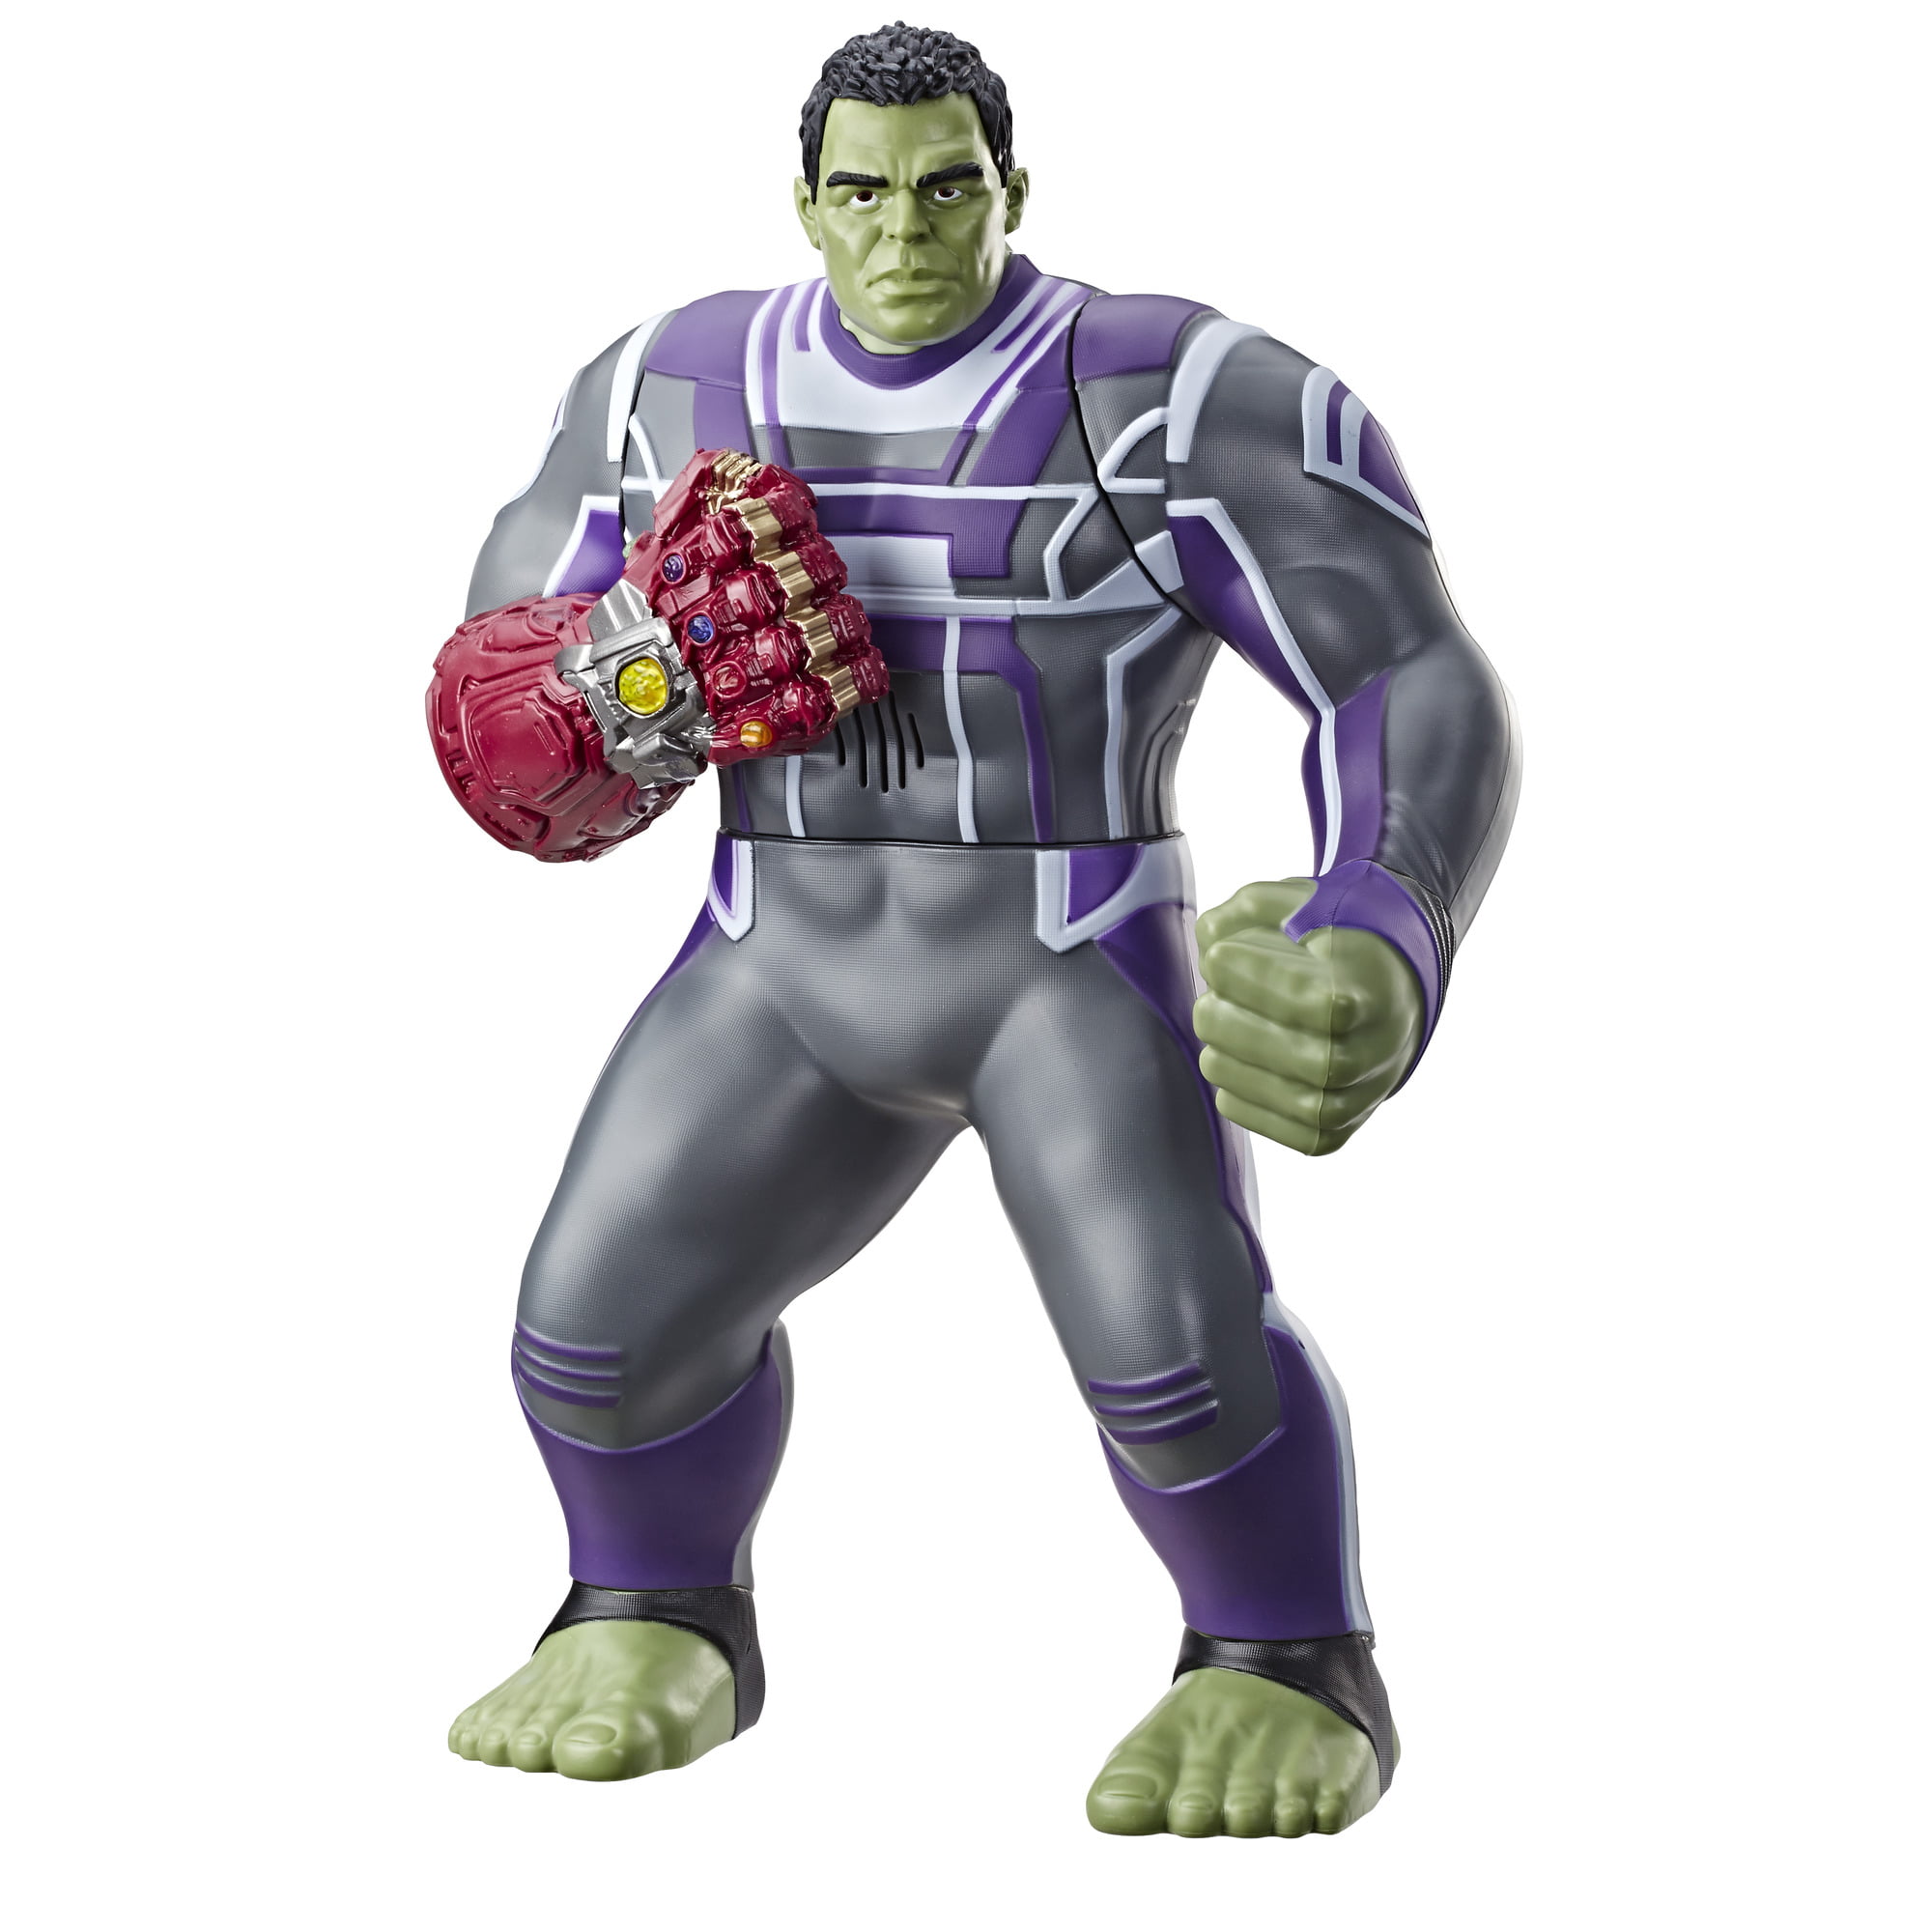 small hulk action figure